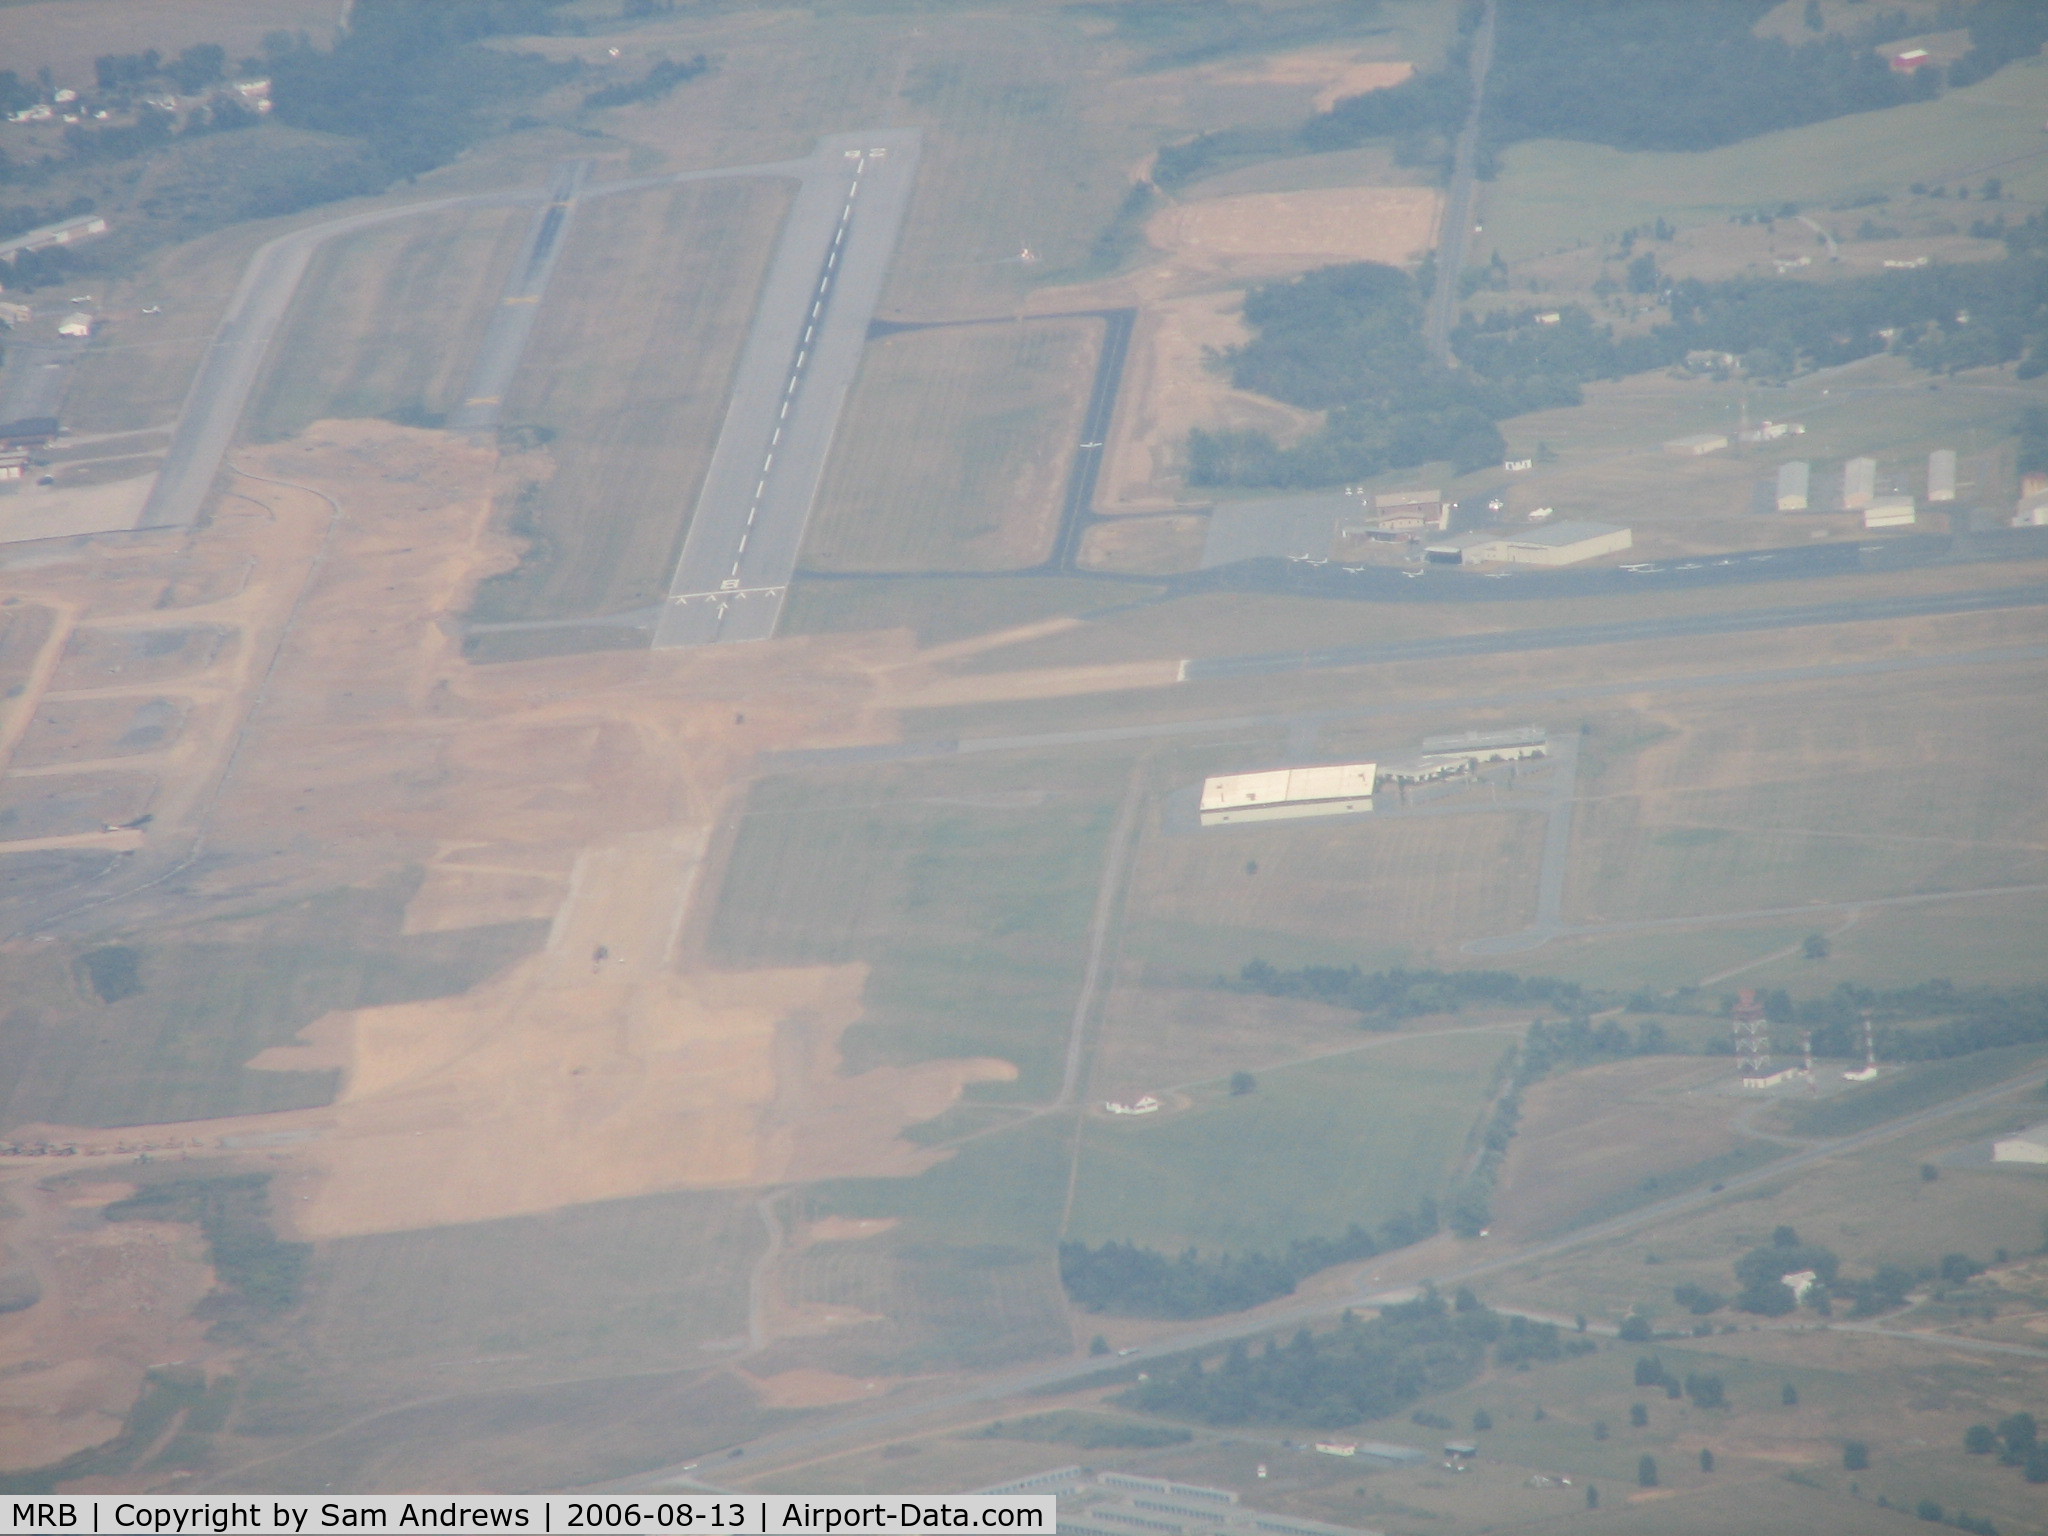 Eastern Wv Rgnl/shepherd Fld Airport (MRB) - From 5500'